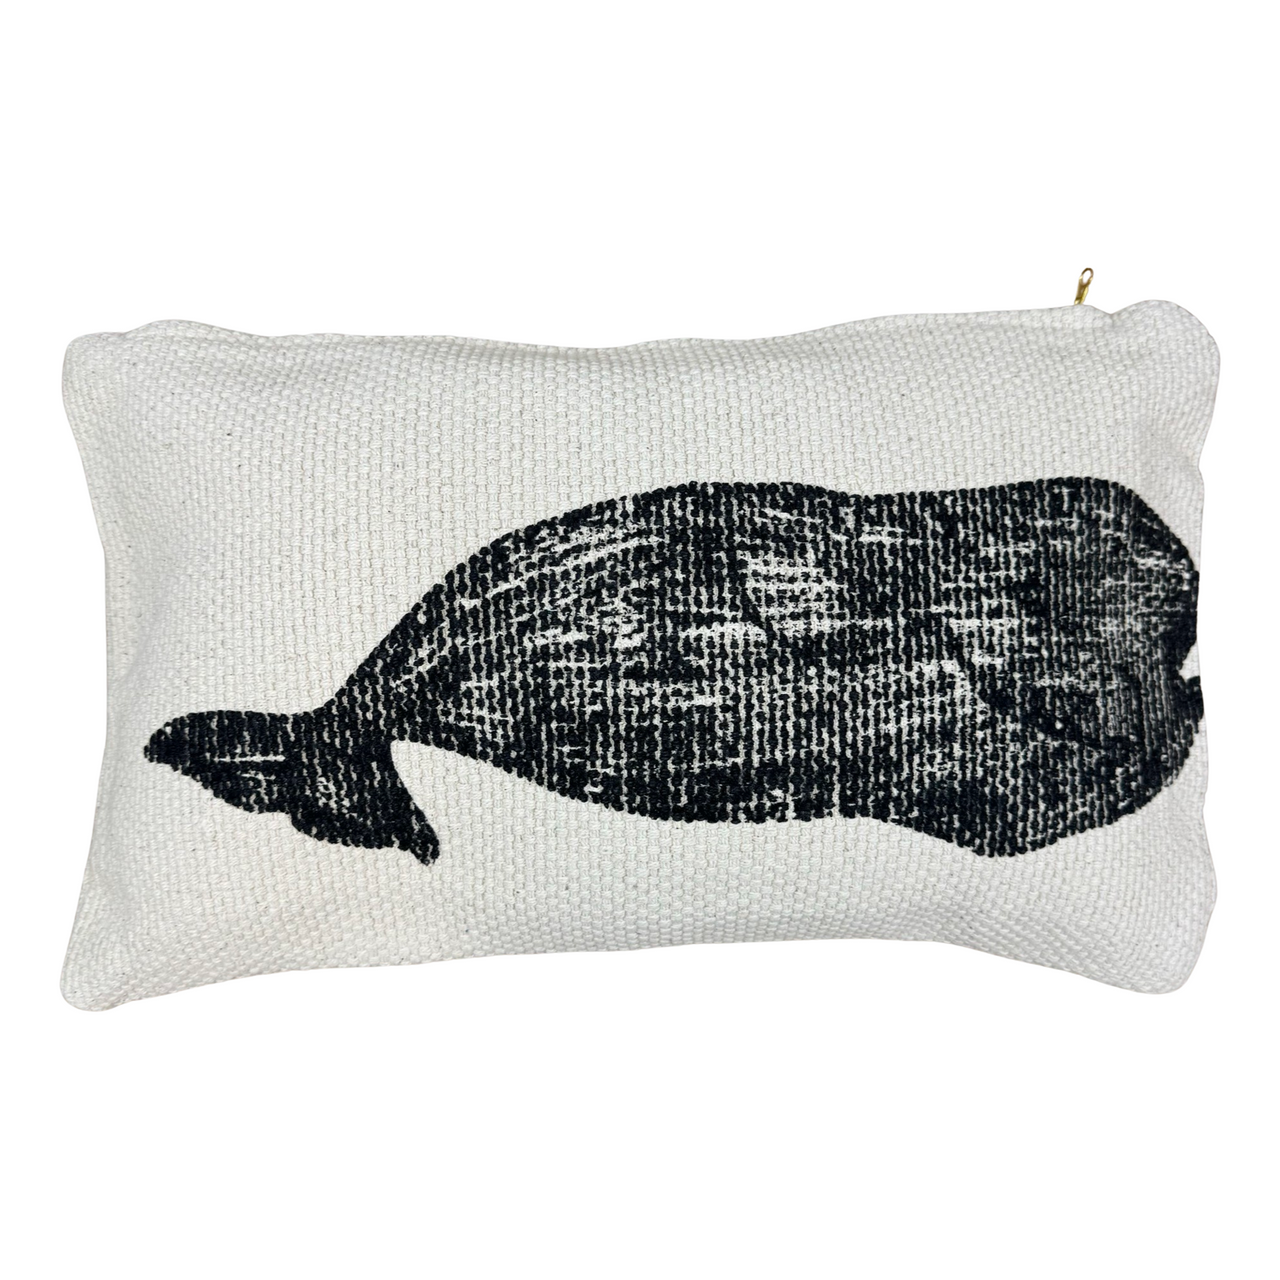 Image of Thomas Paul Woven Whale and Stripe Print Pillowcase